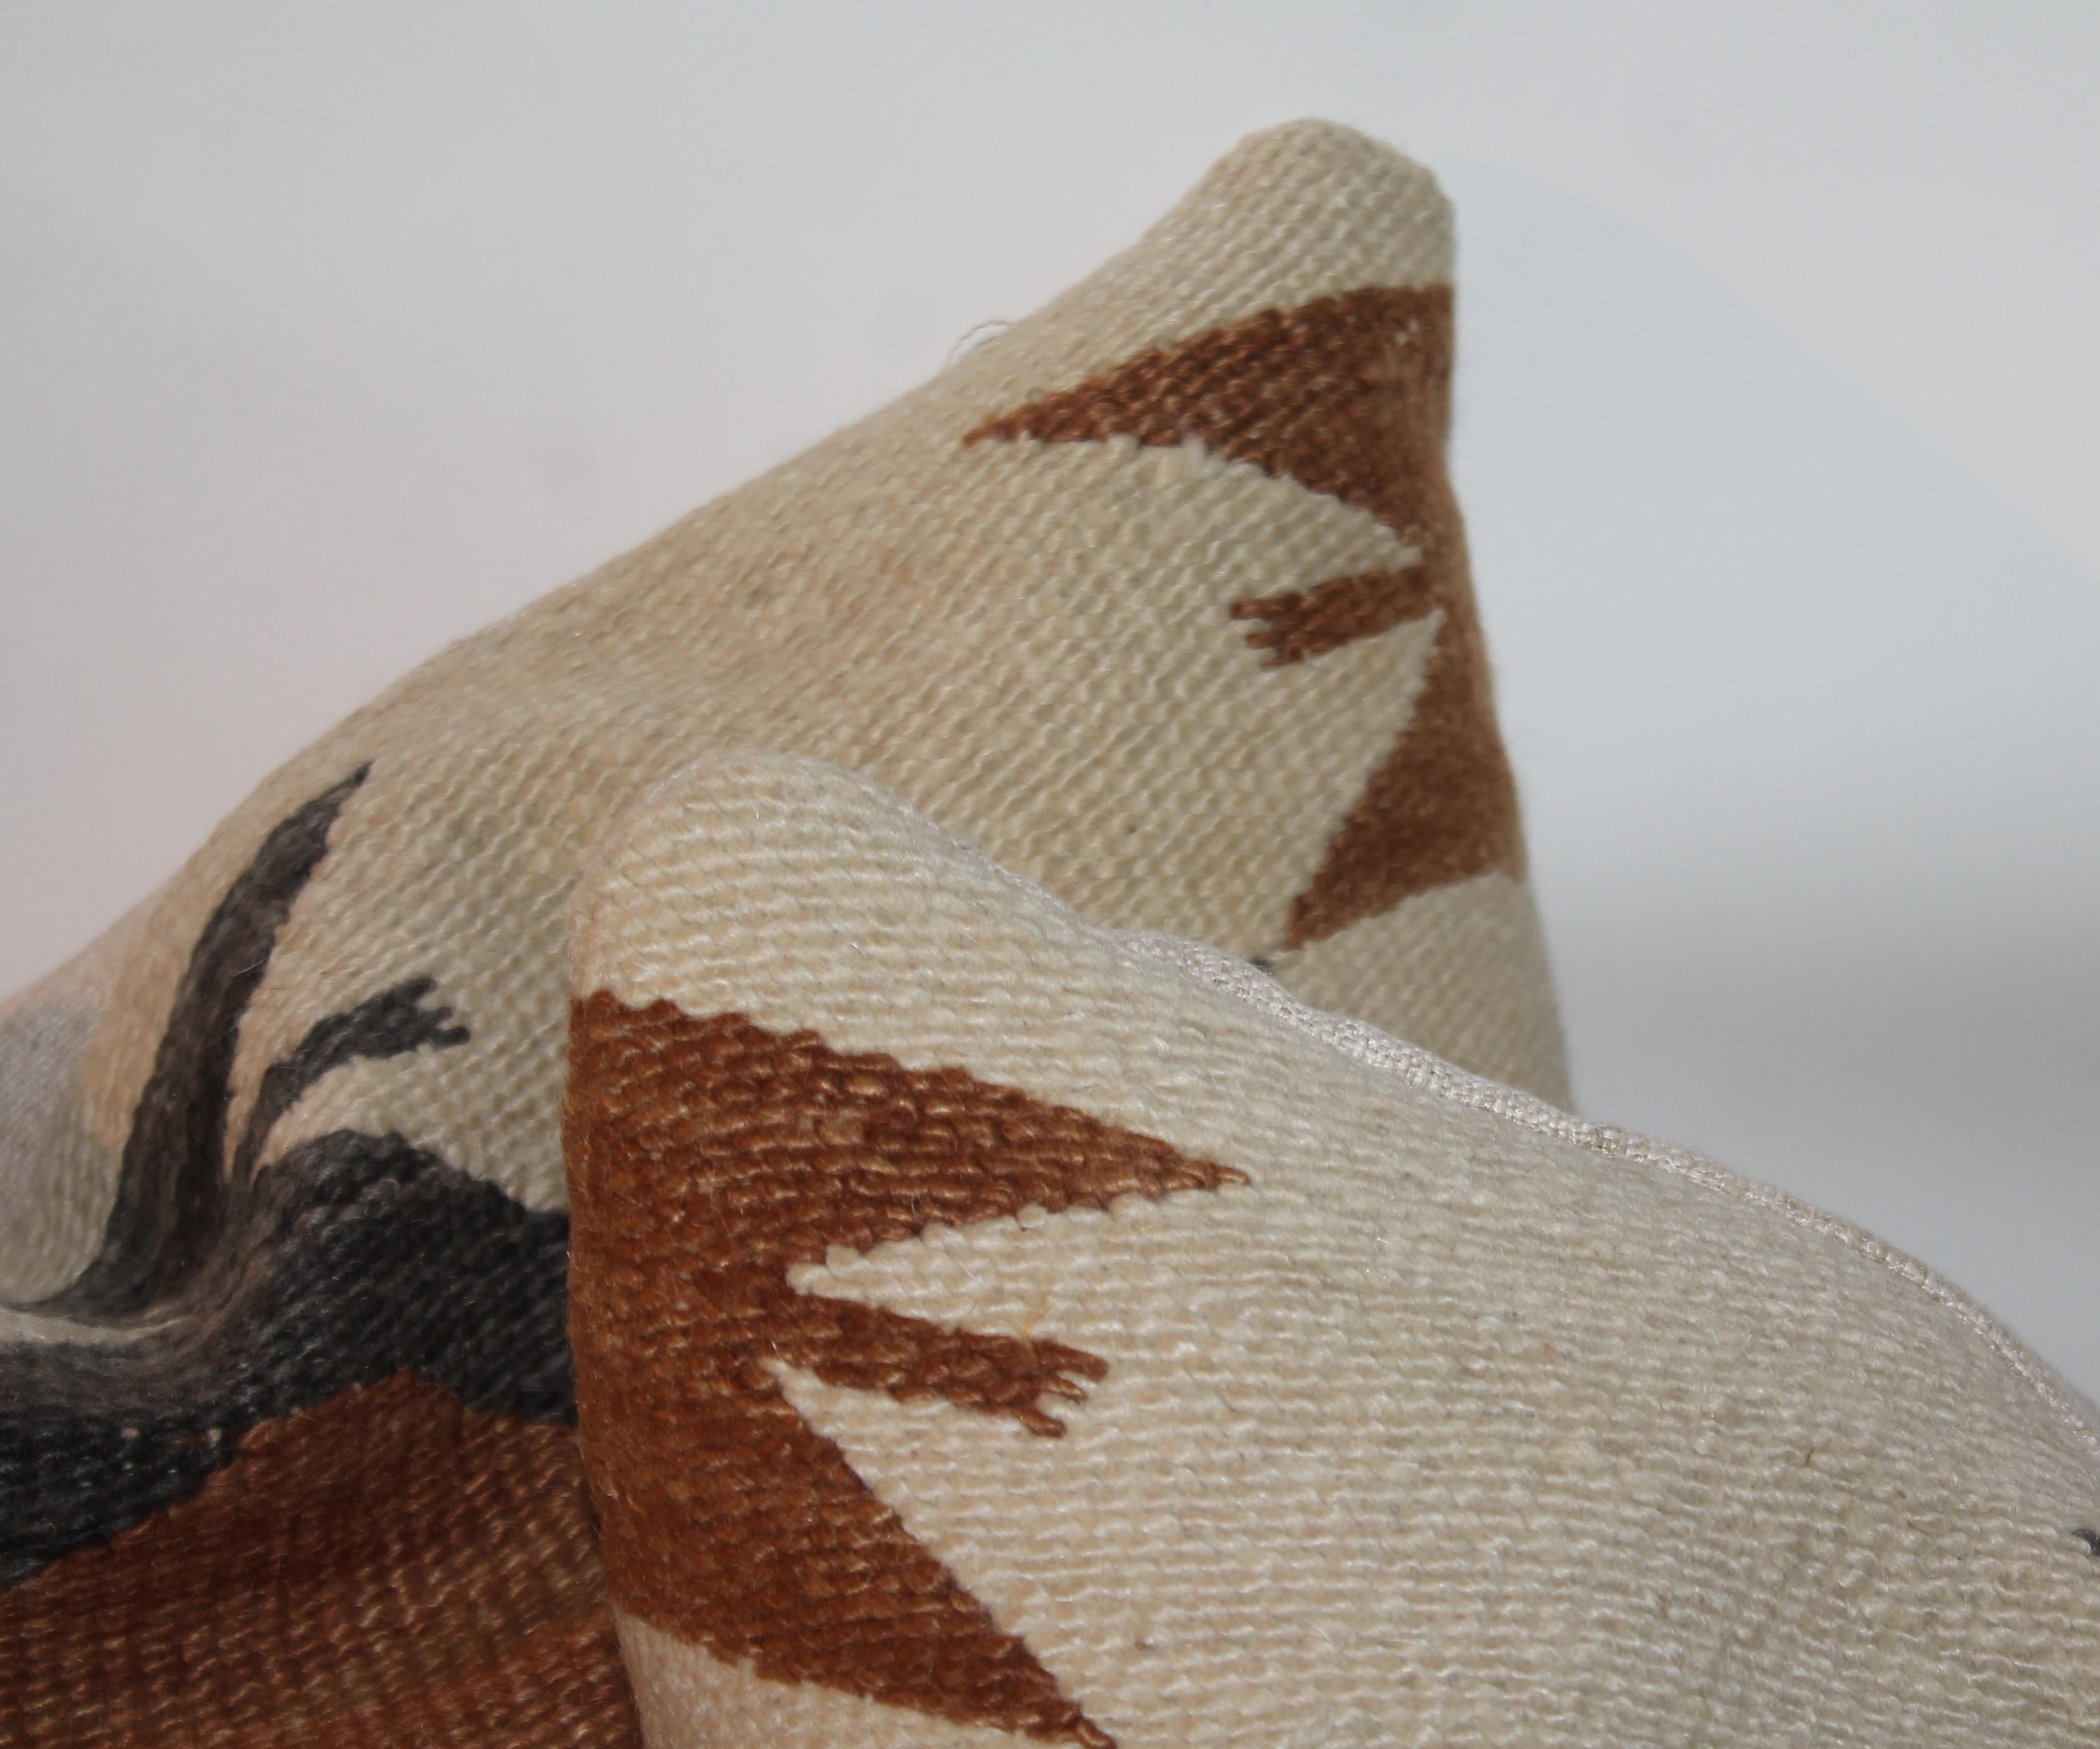 Fantastic brown & black Navajo Indian weaving pillows. Rare and unusual geometric design and colors.